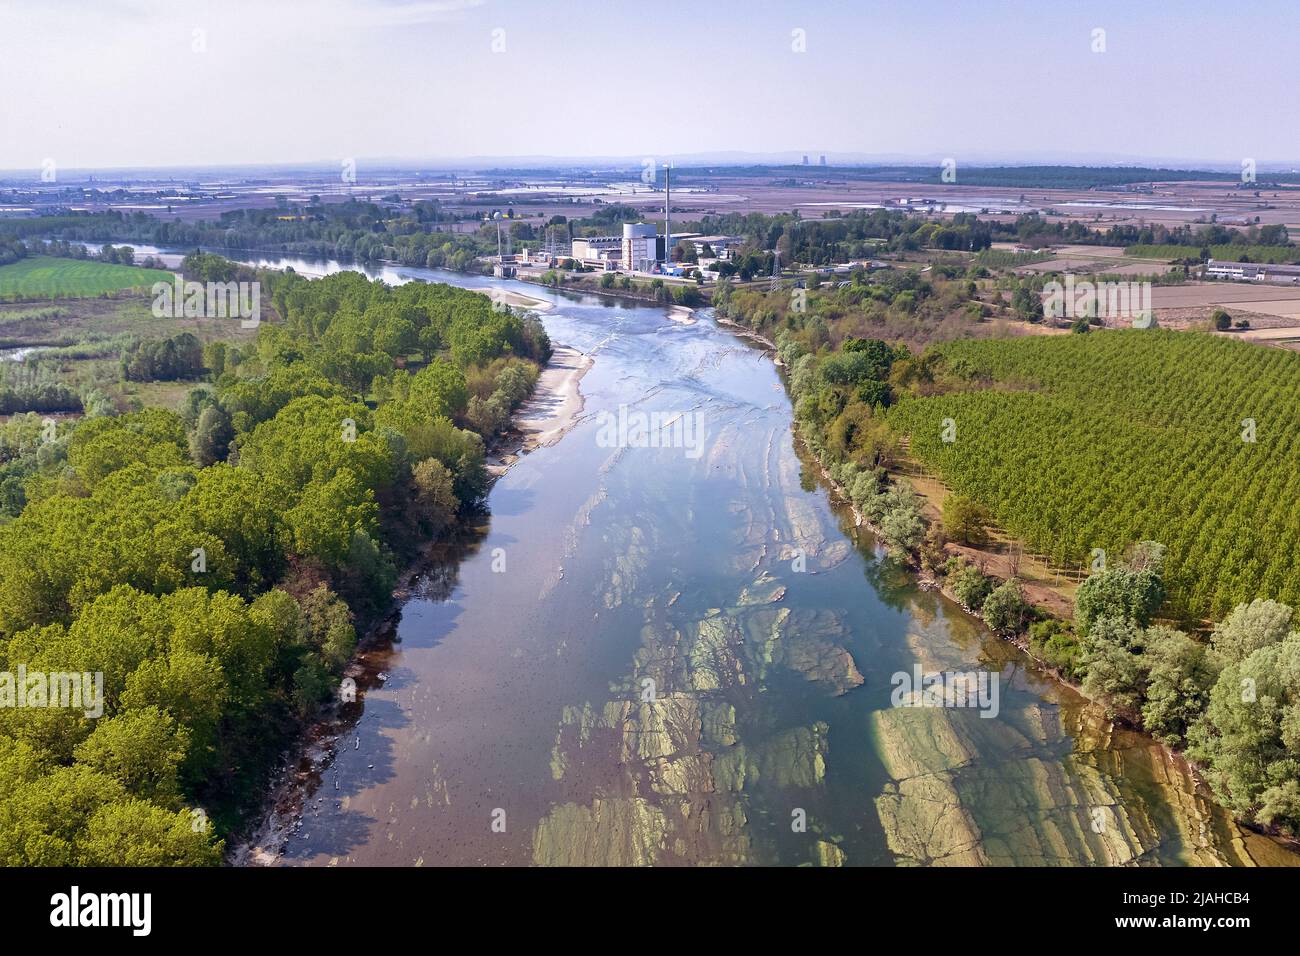 Vista aérea de la central nuclear de Trino Vercellese, construida sobre el río Po. Trino, Italia - Abril 2021 Foto de stock